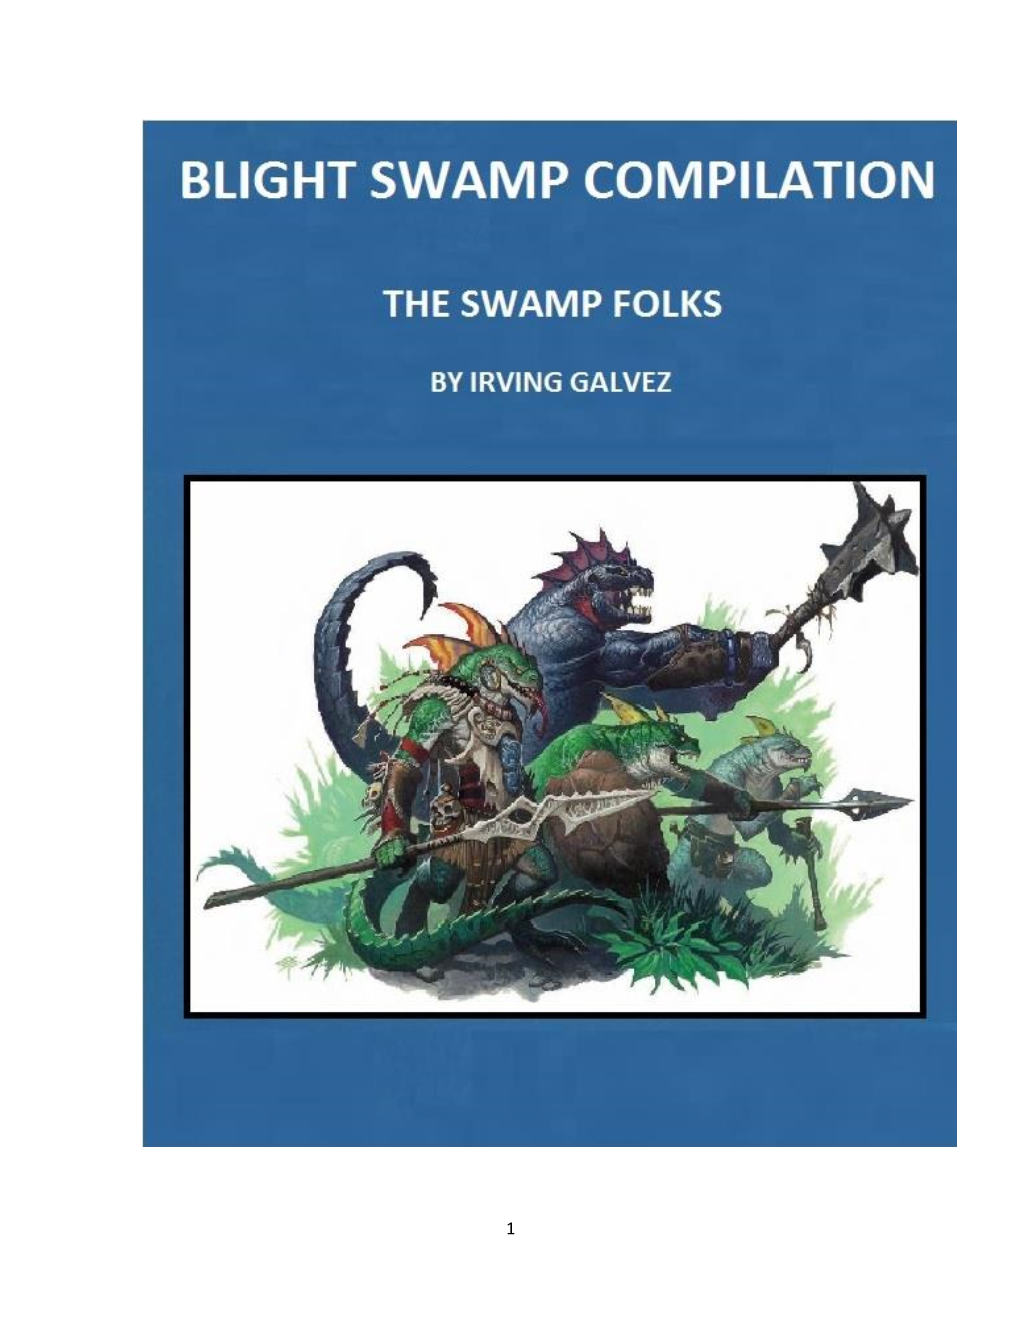 Blight Swamp Compilation (The Swamp Folks)